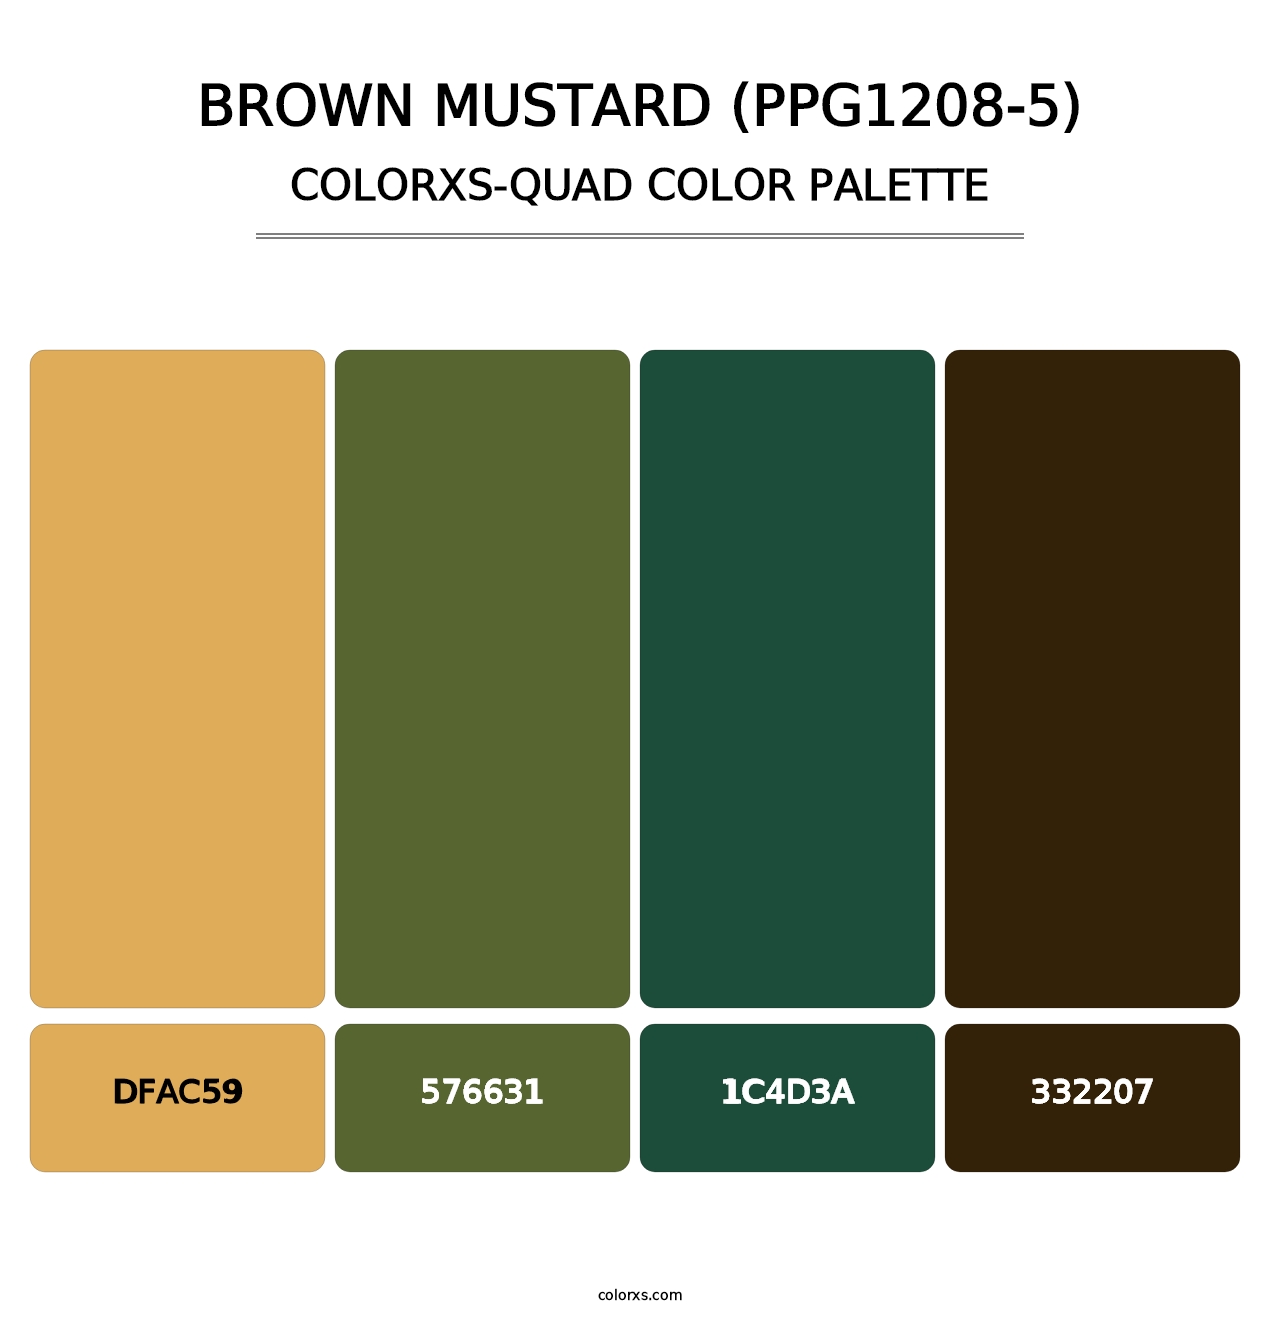 Brown Mustard (PPG1208-5) - Colorxs Quad Palette